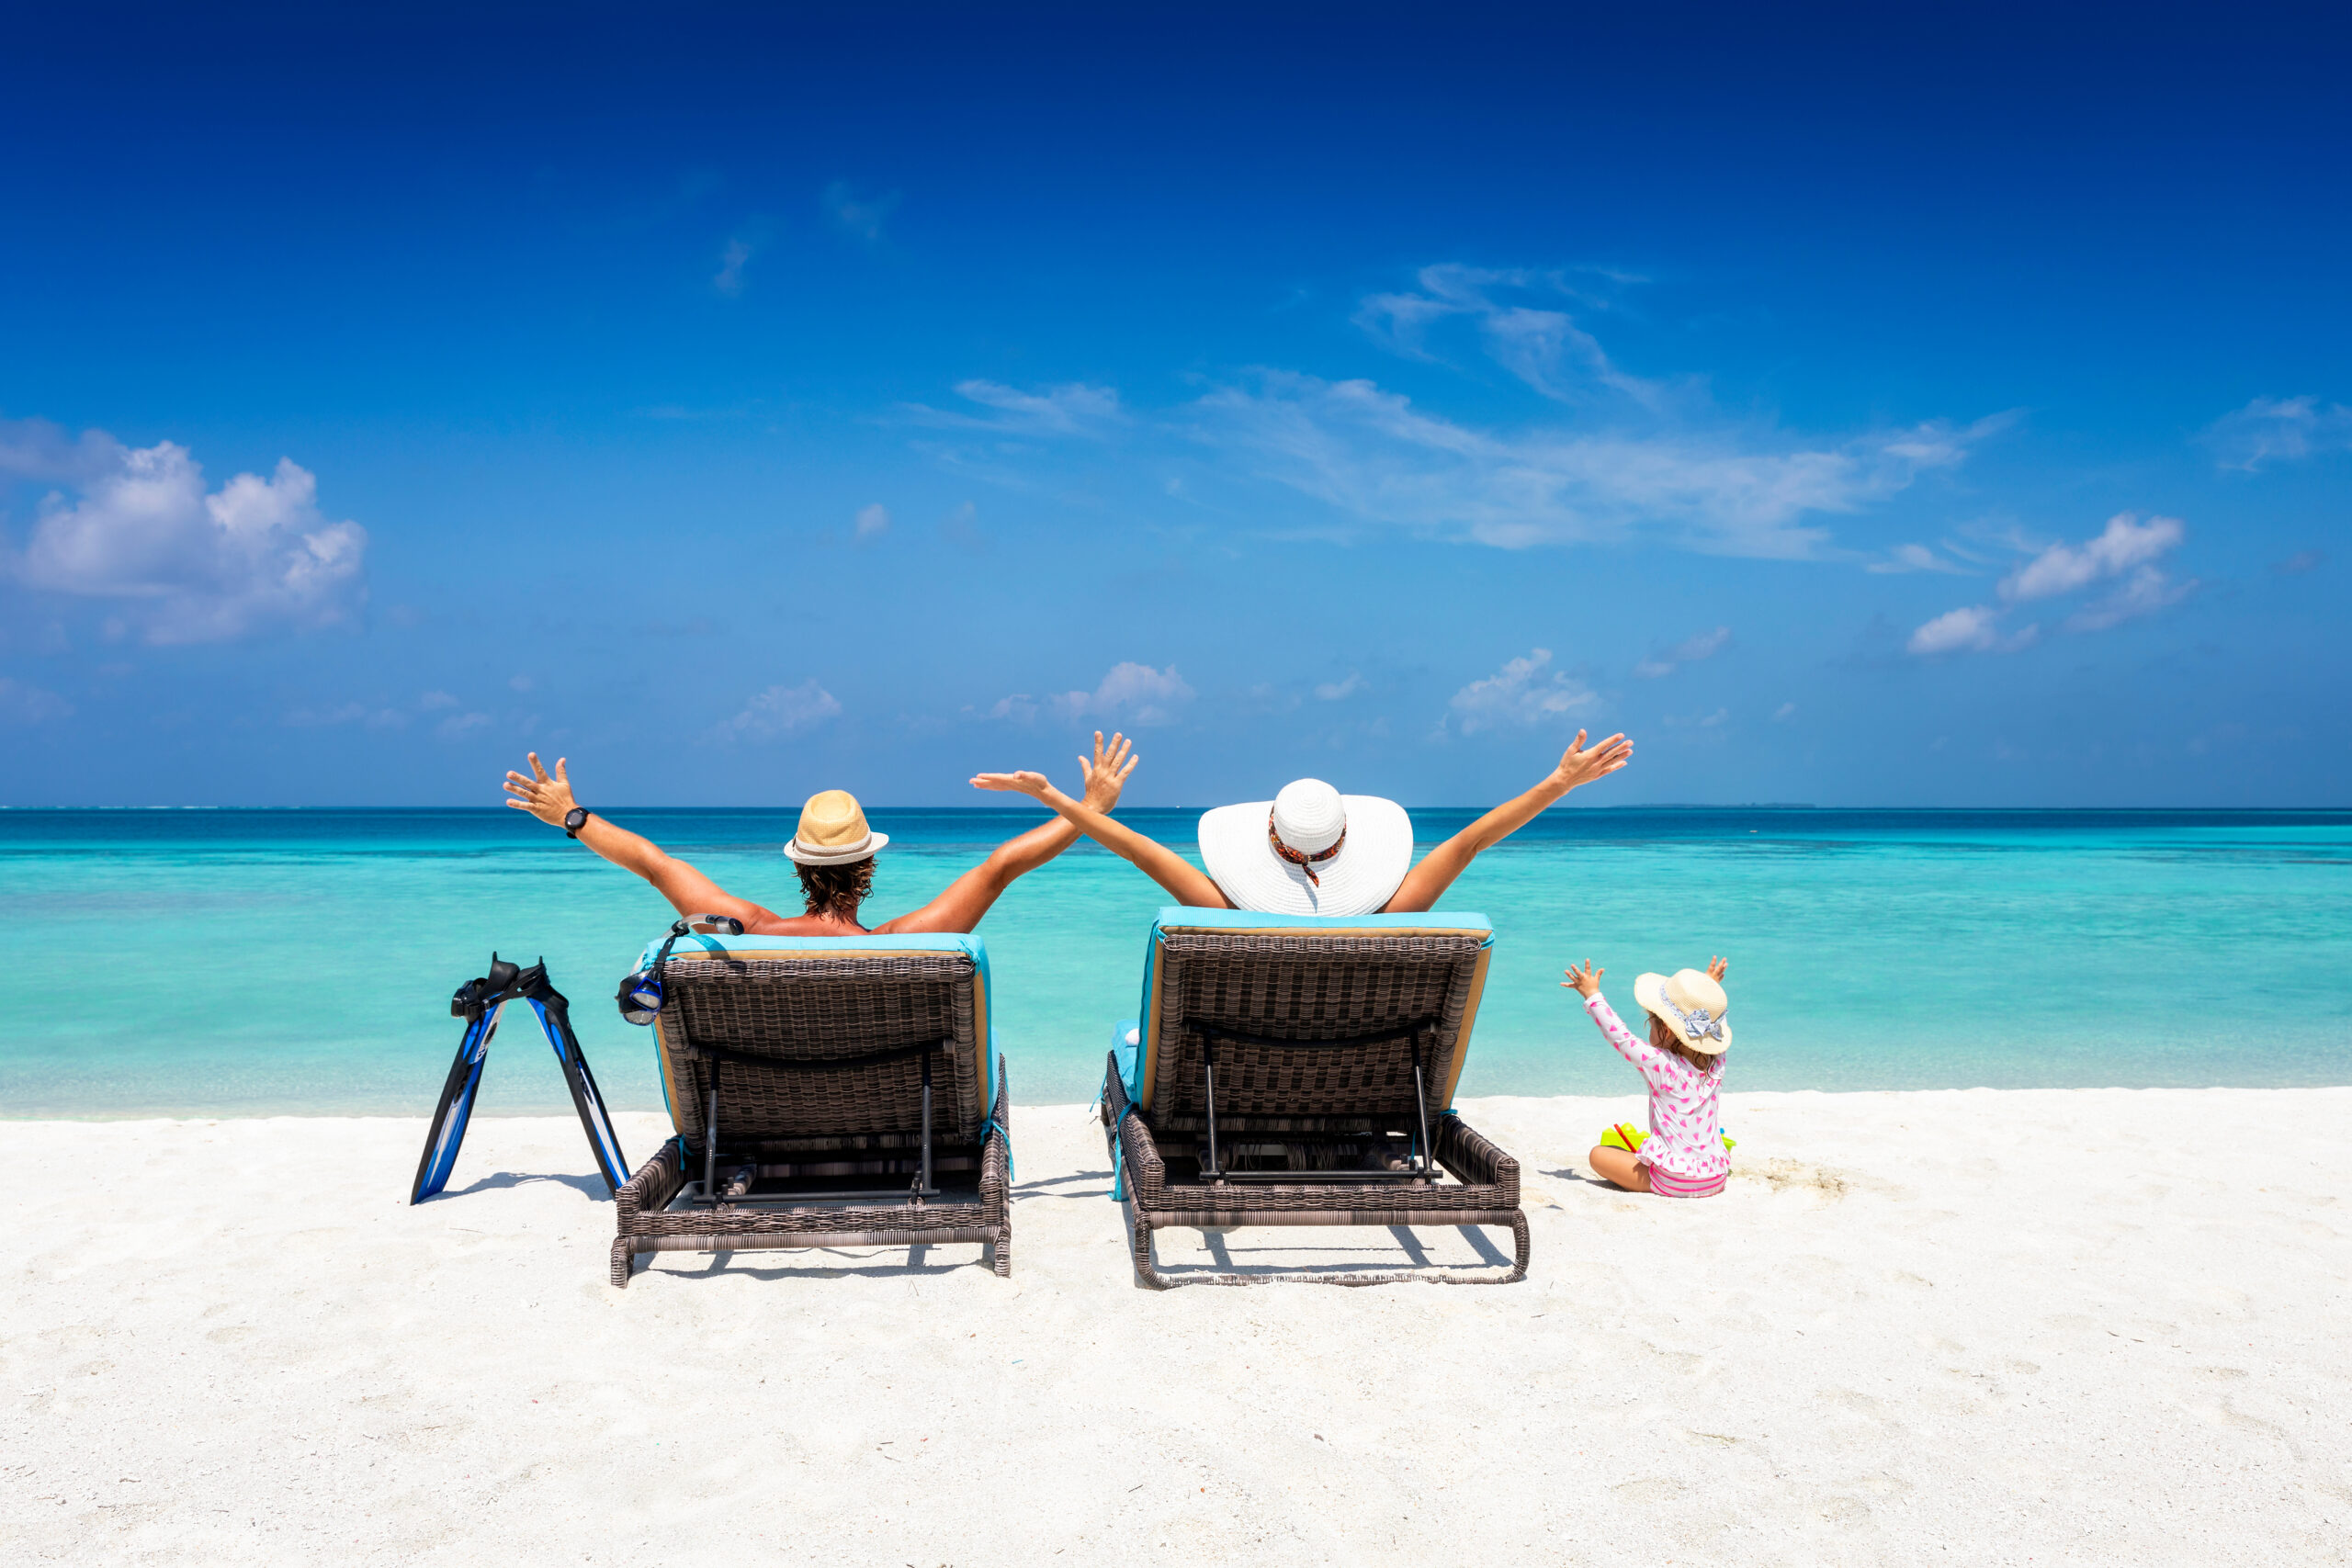 Happy family on sunbeds enjoys their vacation on a tropical beac